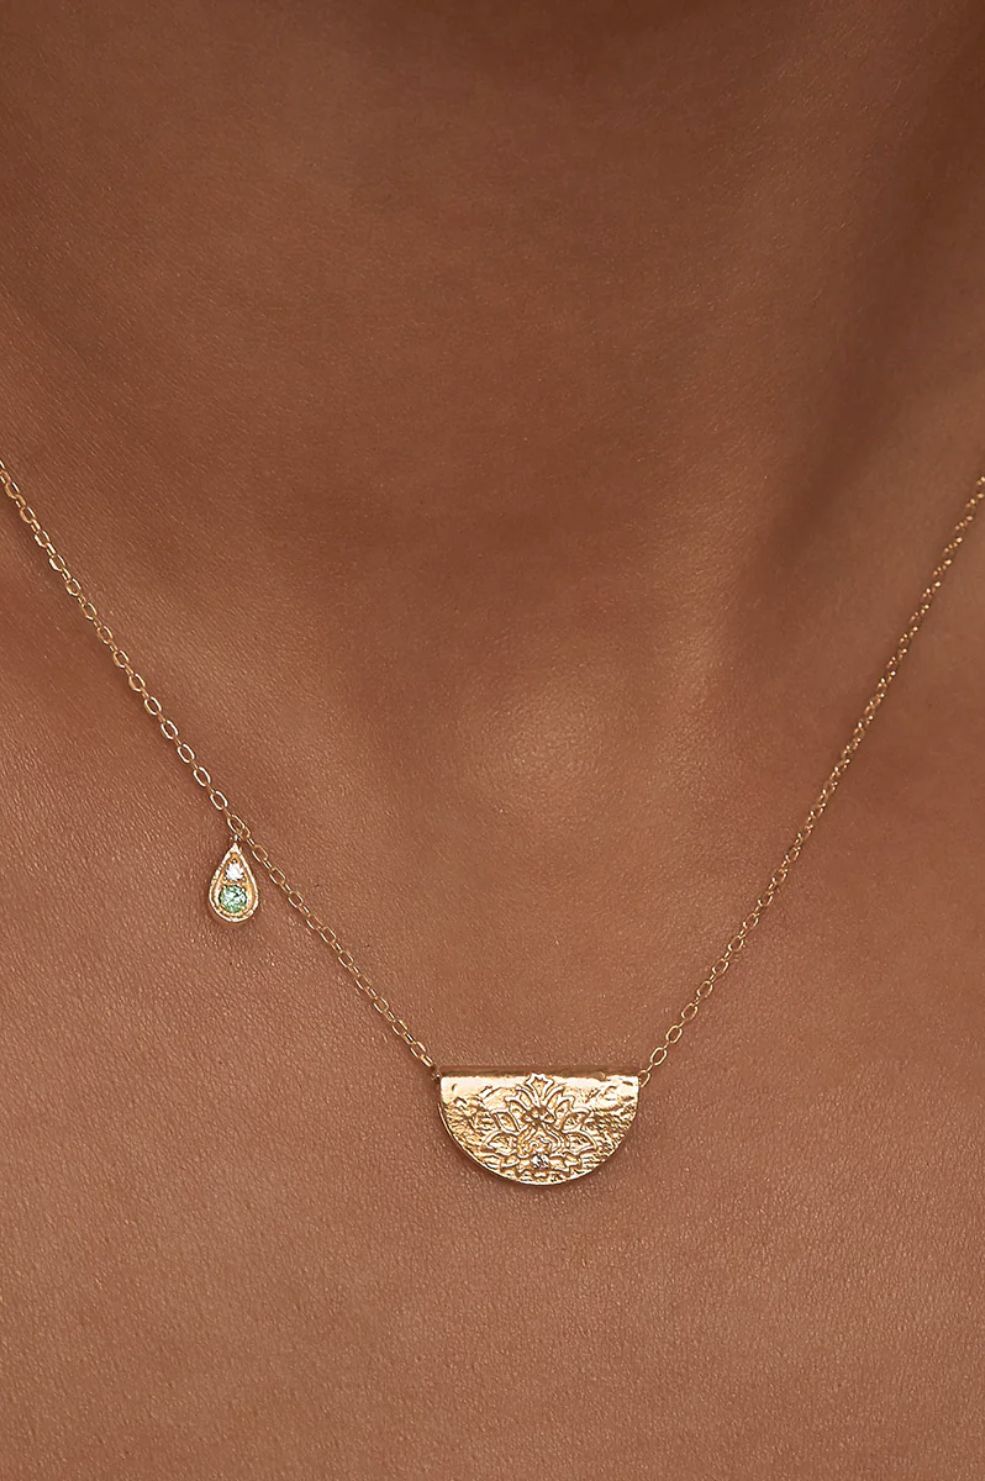 Lotus Birthstone Necklace - Peridot